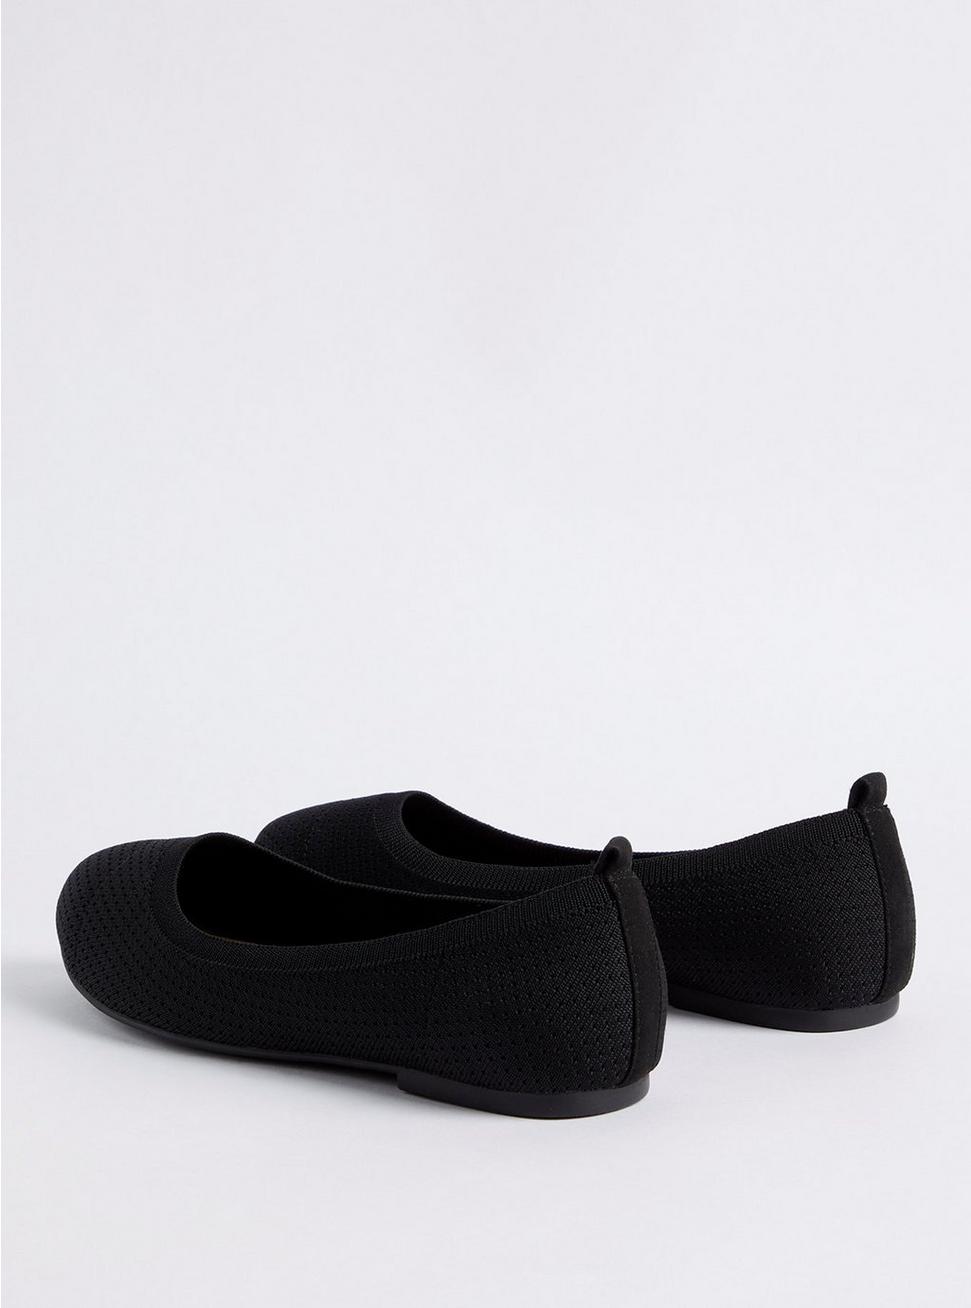 Plus Size - Ballet Flat - Stretch Knit Black (WW) - Torrid